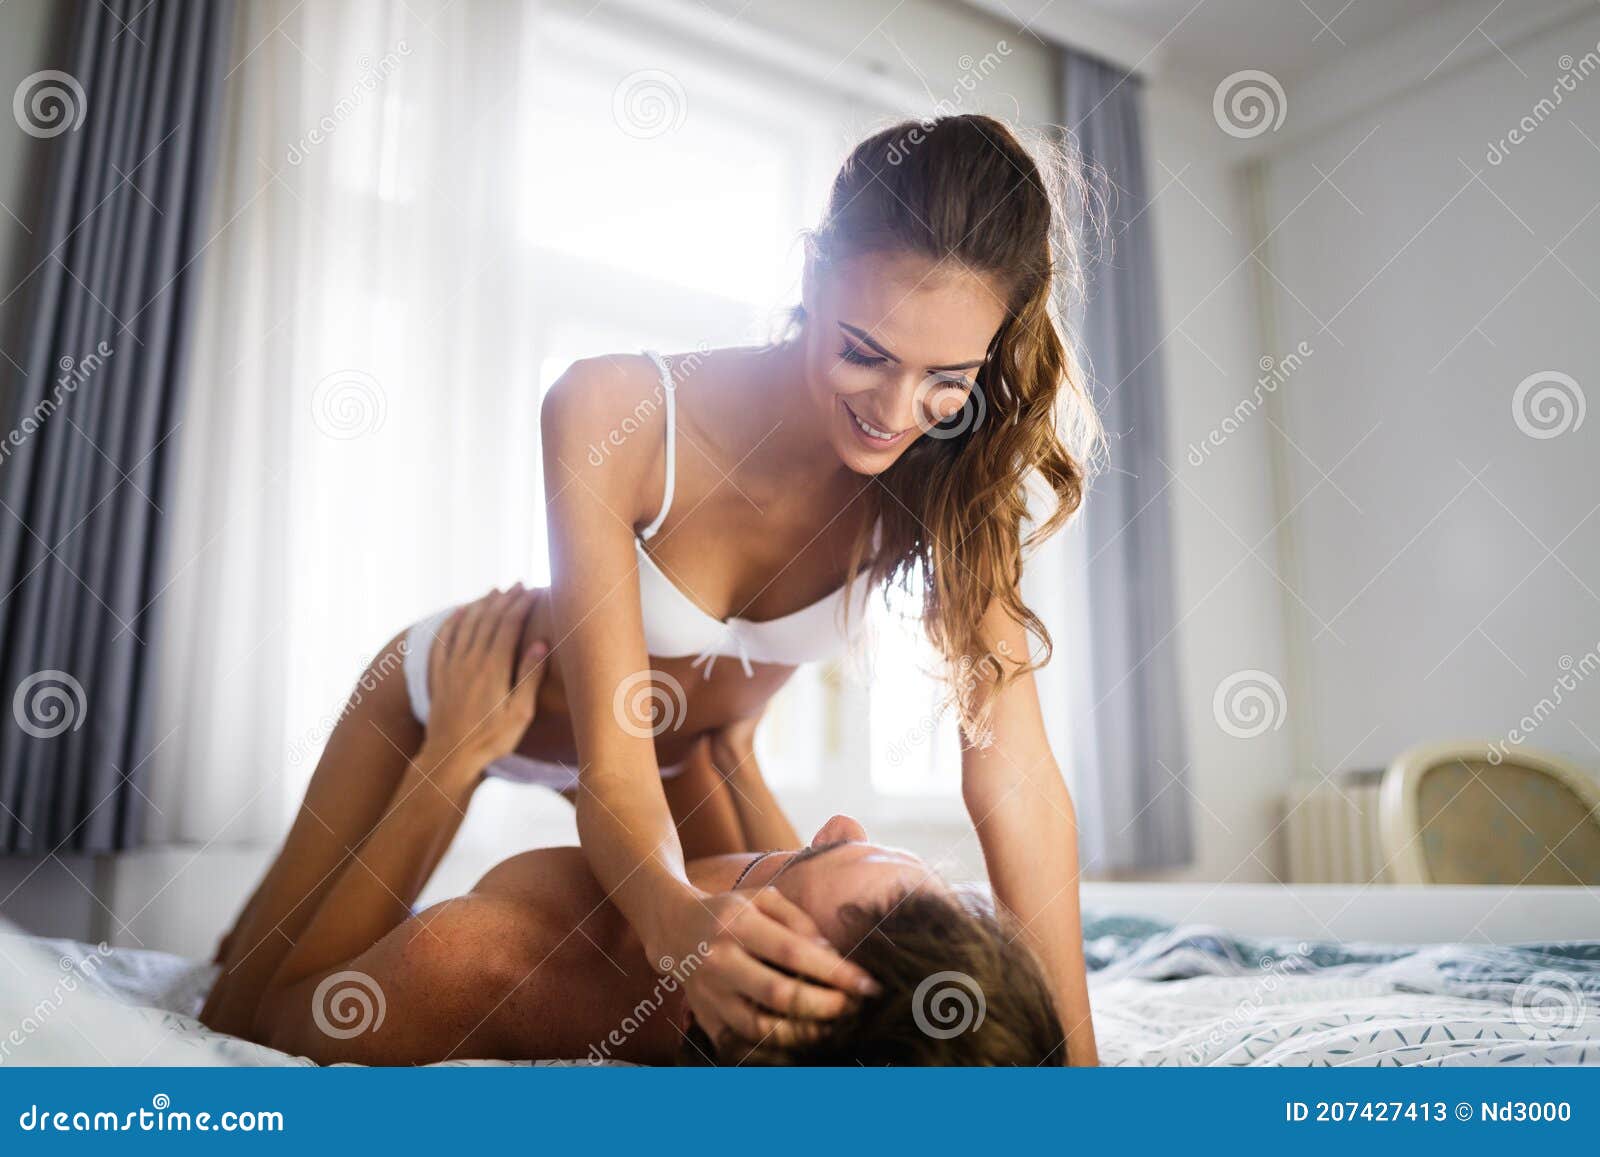 Women erotic Caressing Women: